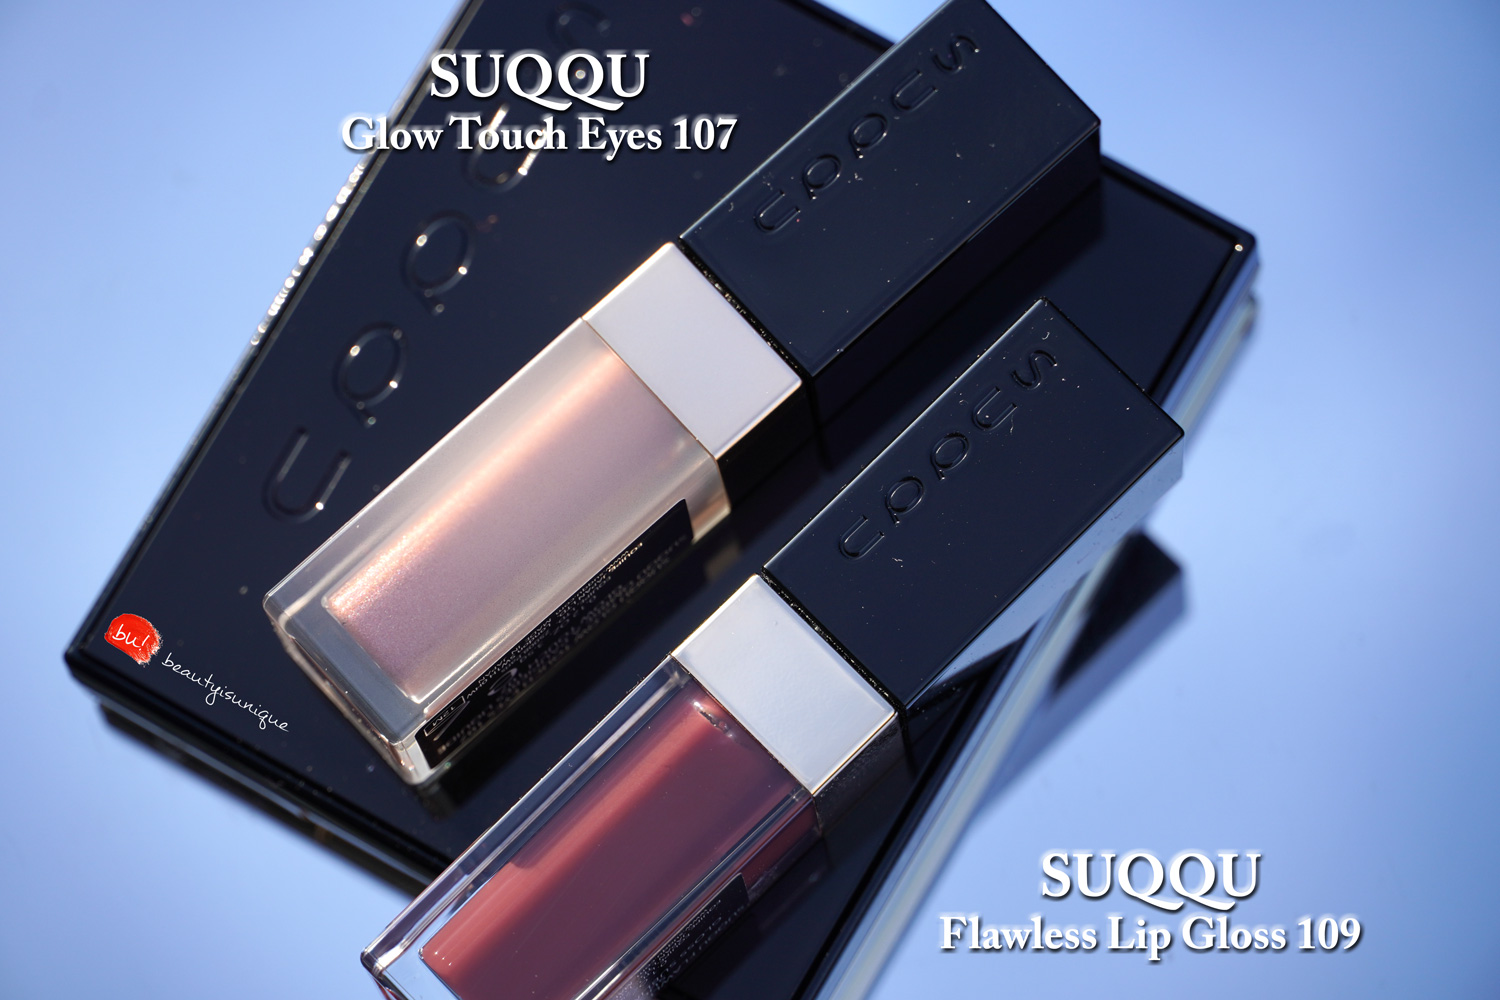 suqqu-glow-touch-eyes-107